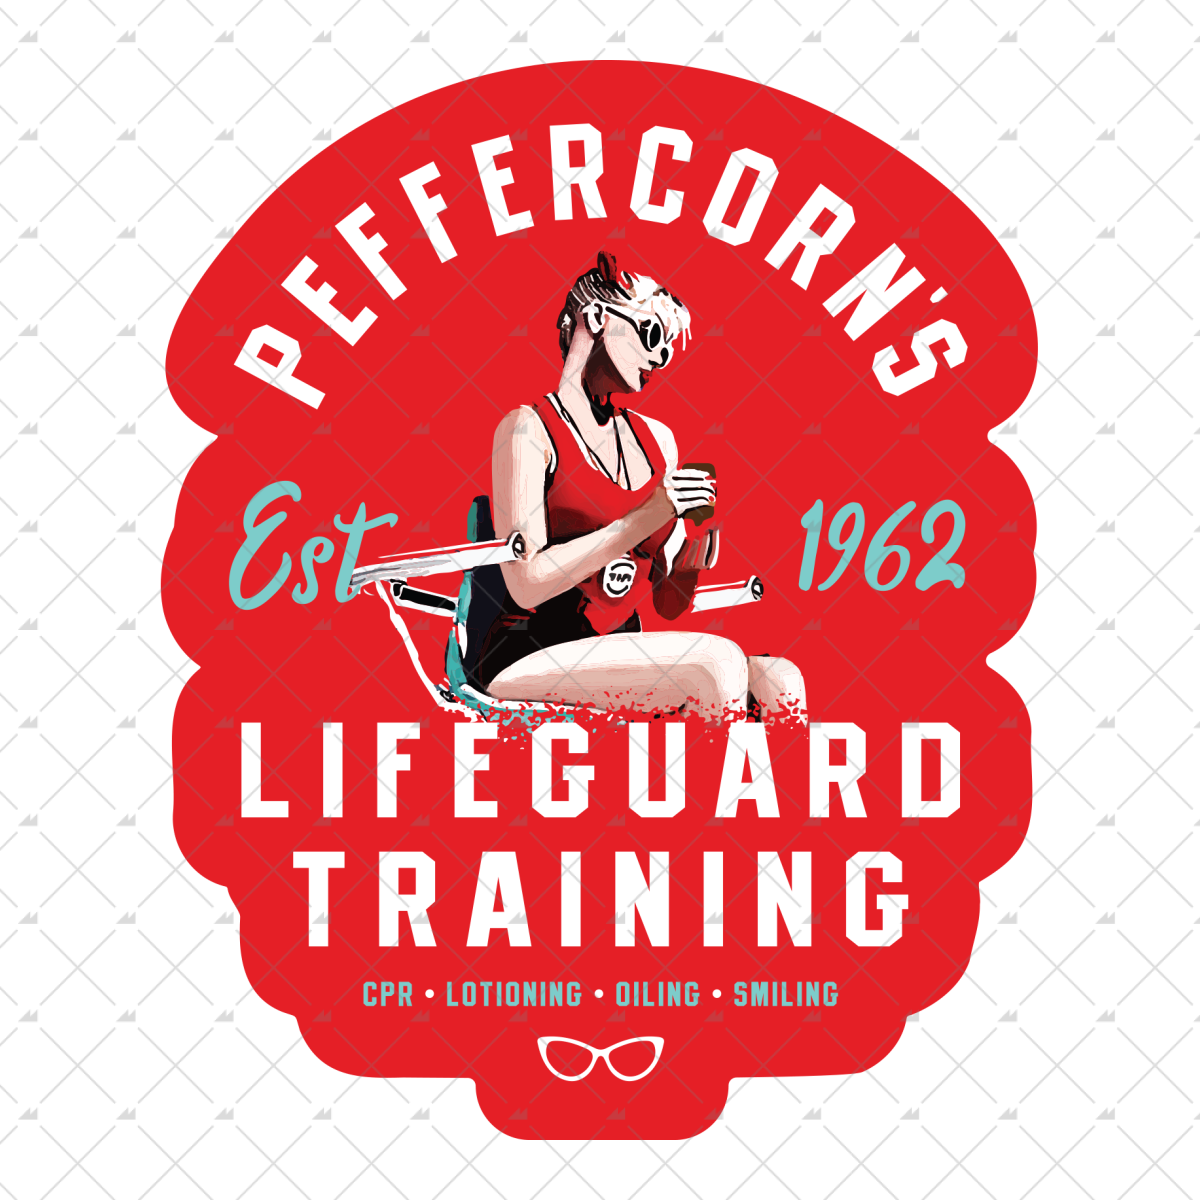 Peffercorn's Lifeguard Training - Sticker